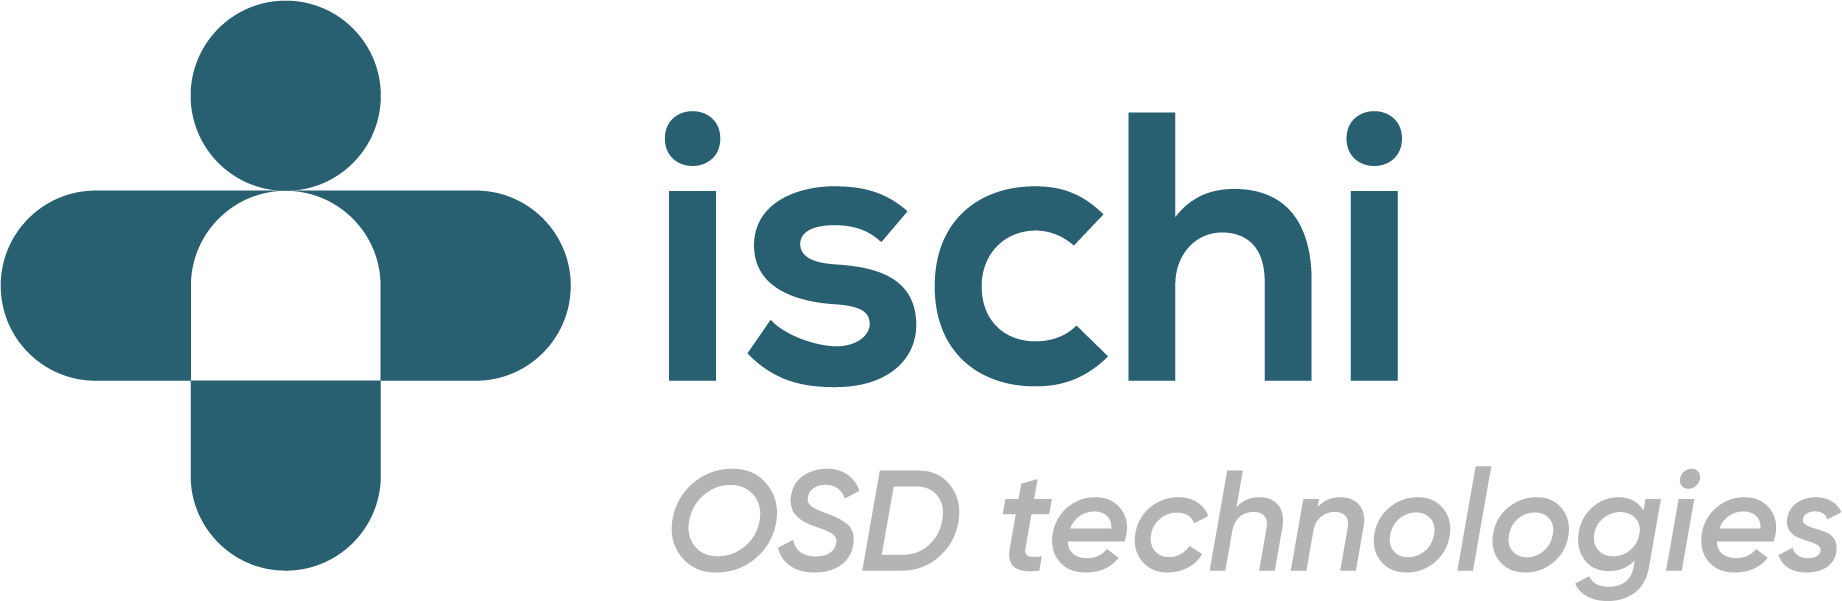 Charles Ischi Tablet disintegration testing